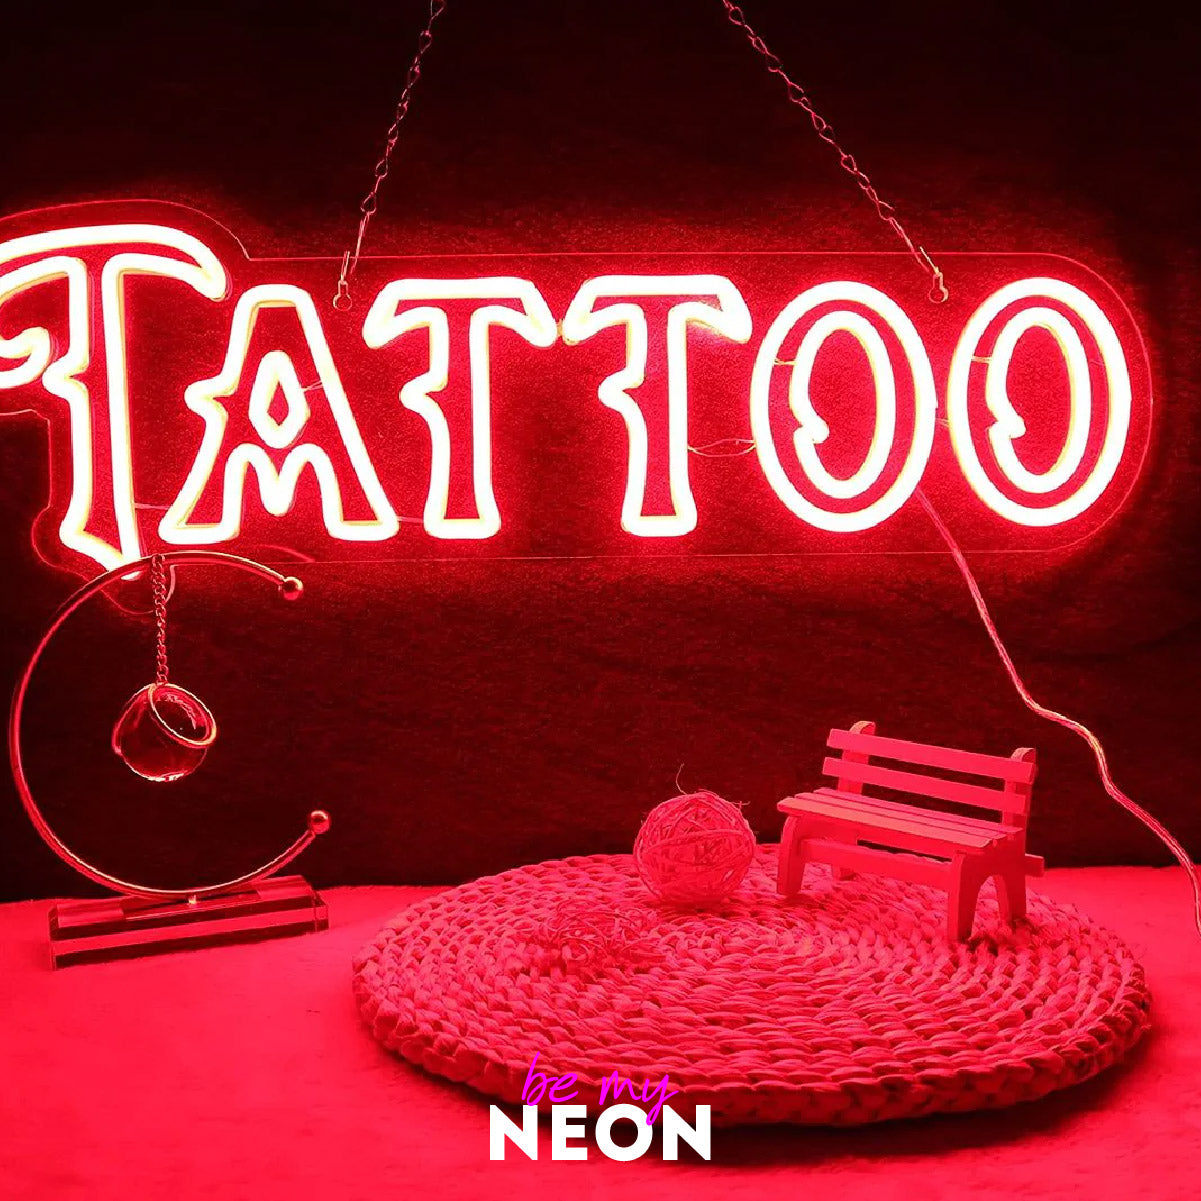 "Tattoo" LED Neonschild